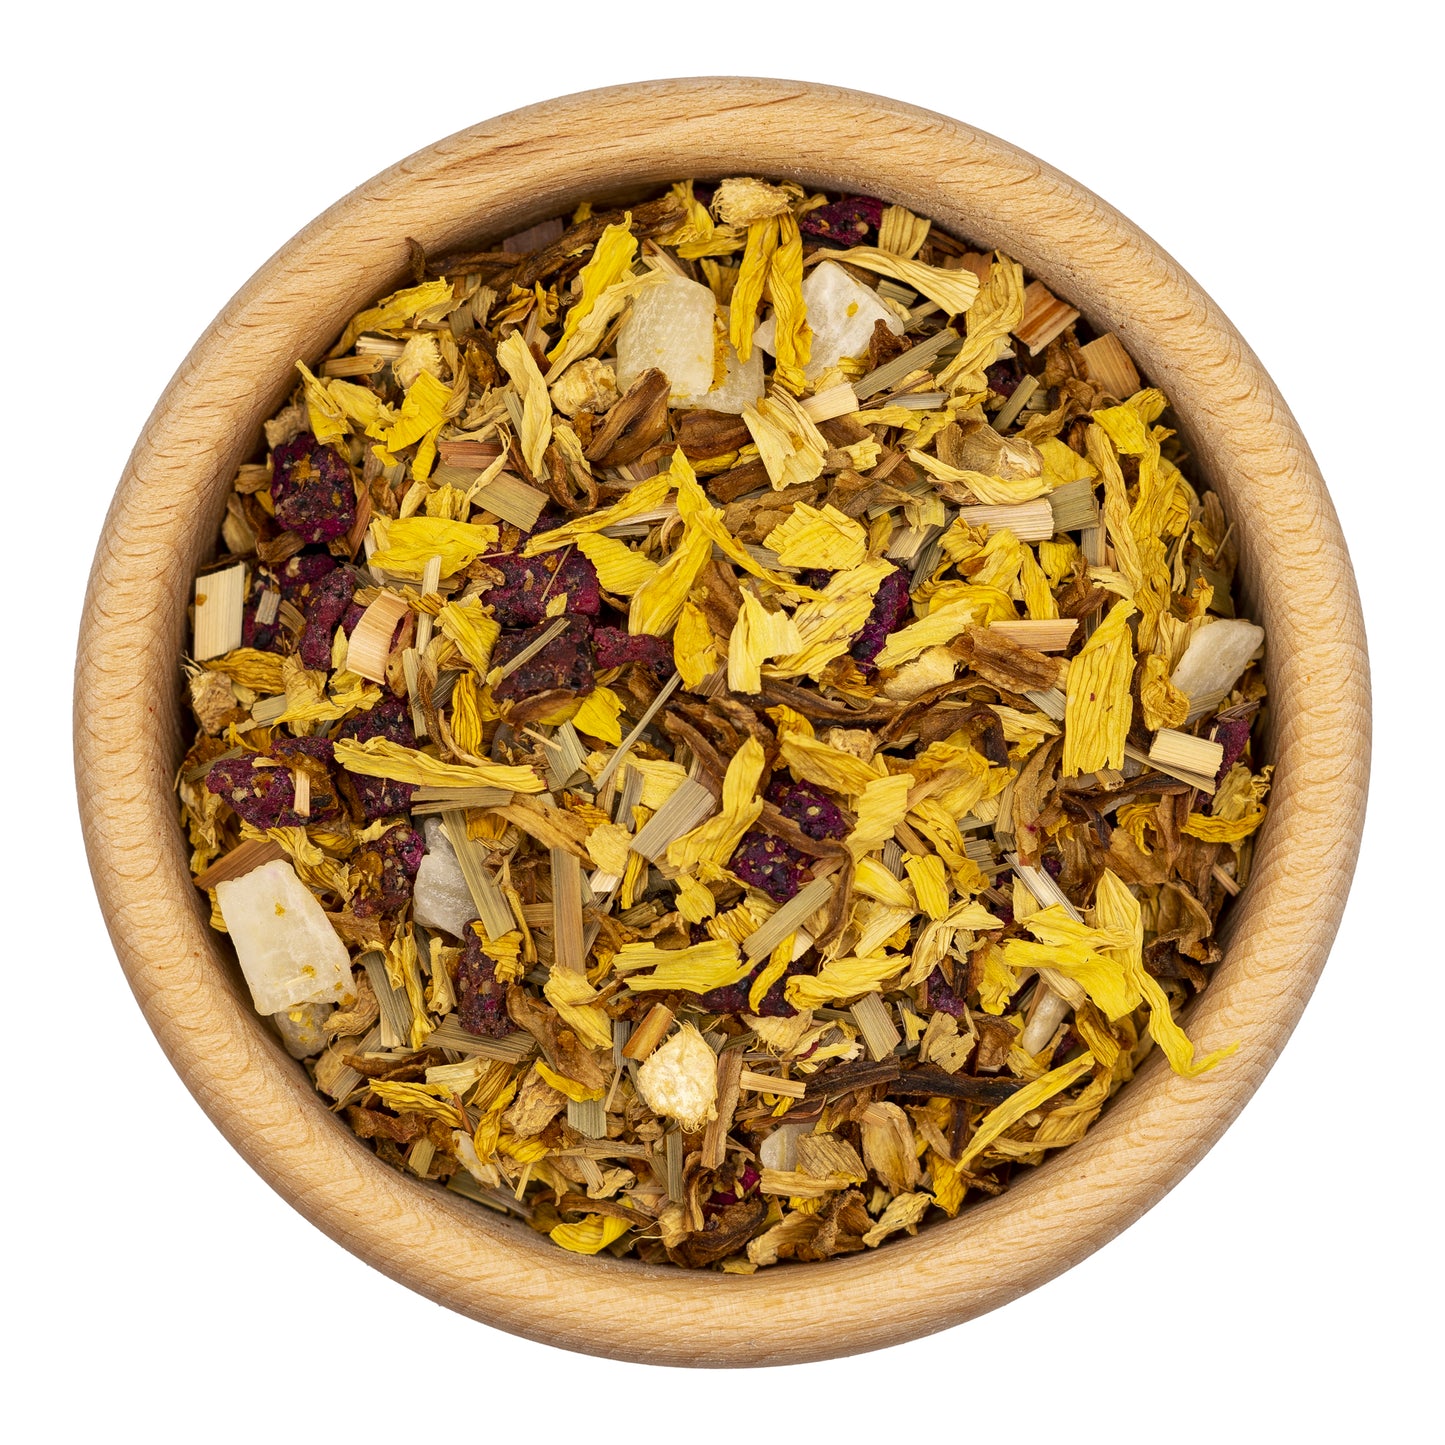 Alpaca Tea | Aloe Vera Ingwer Mandarine | Früchteteemischung | lose | wiederverschließbar